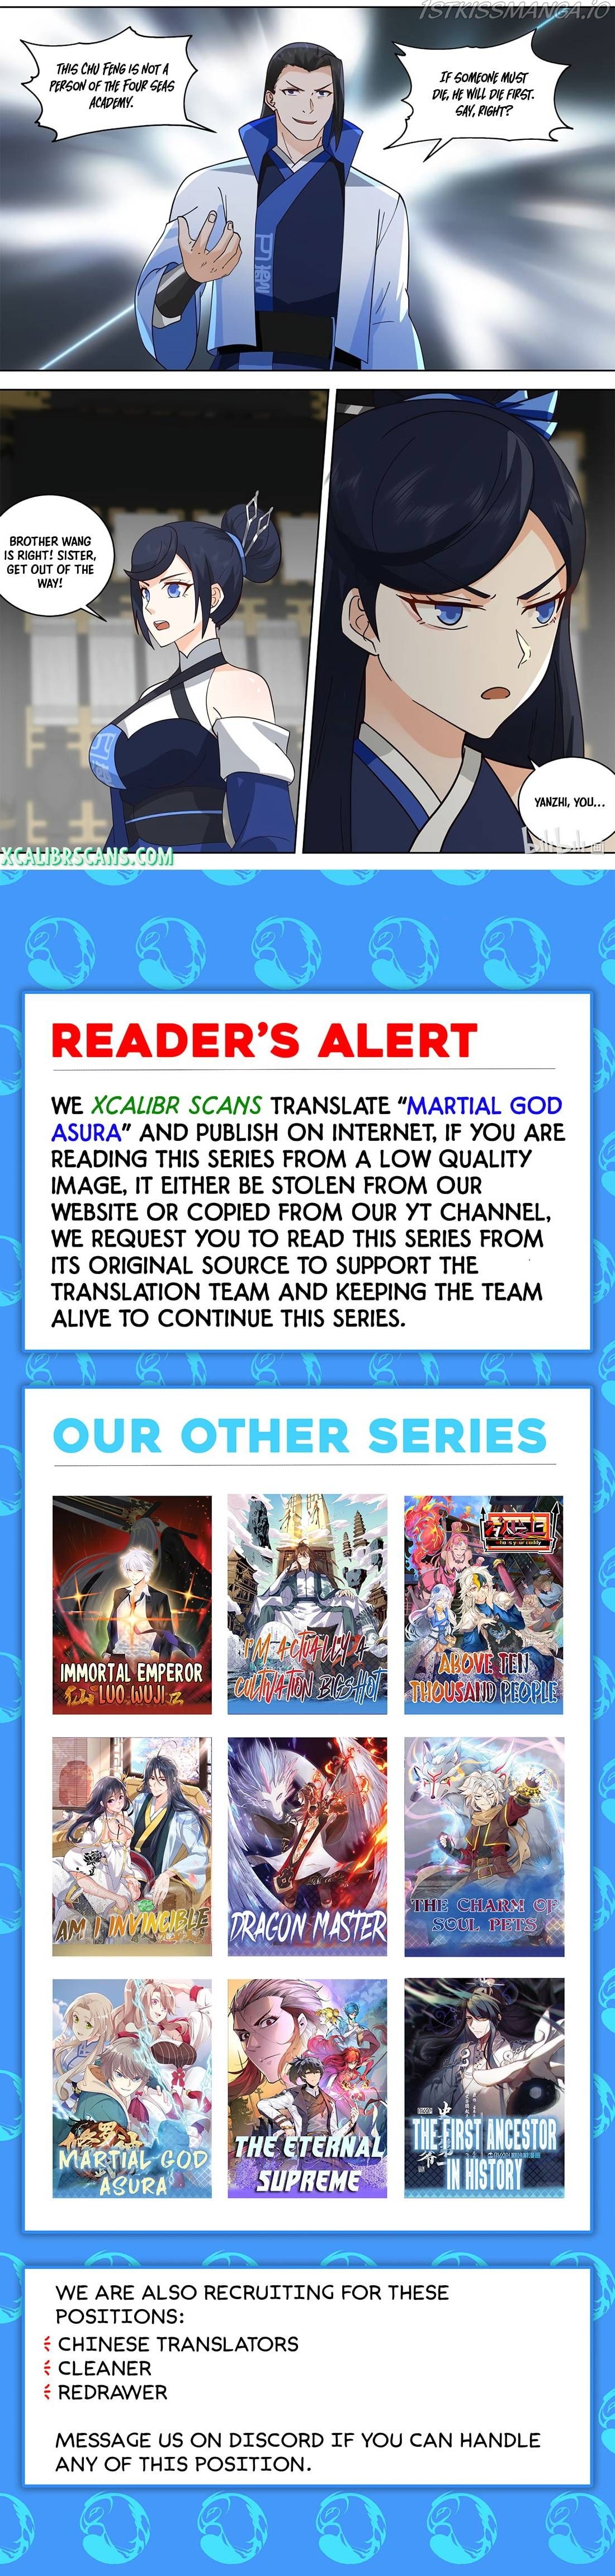 Martial God Asura Chapter 502 - Page 9